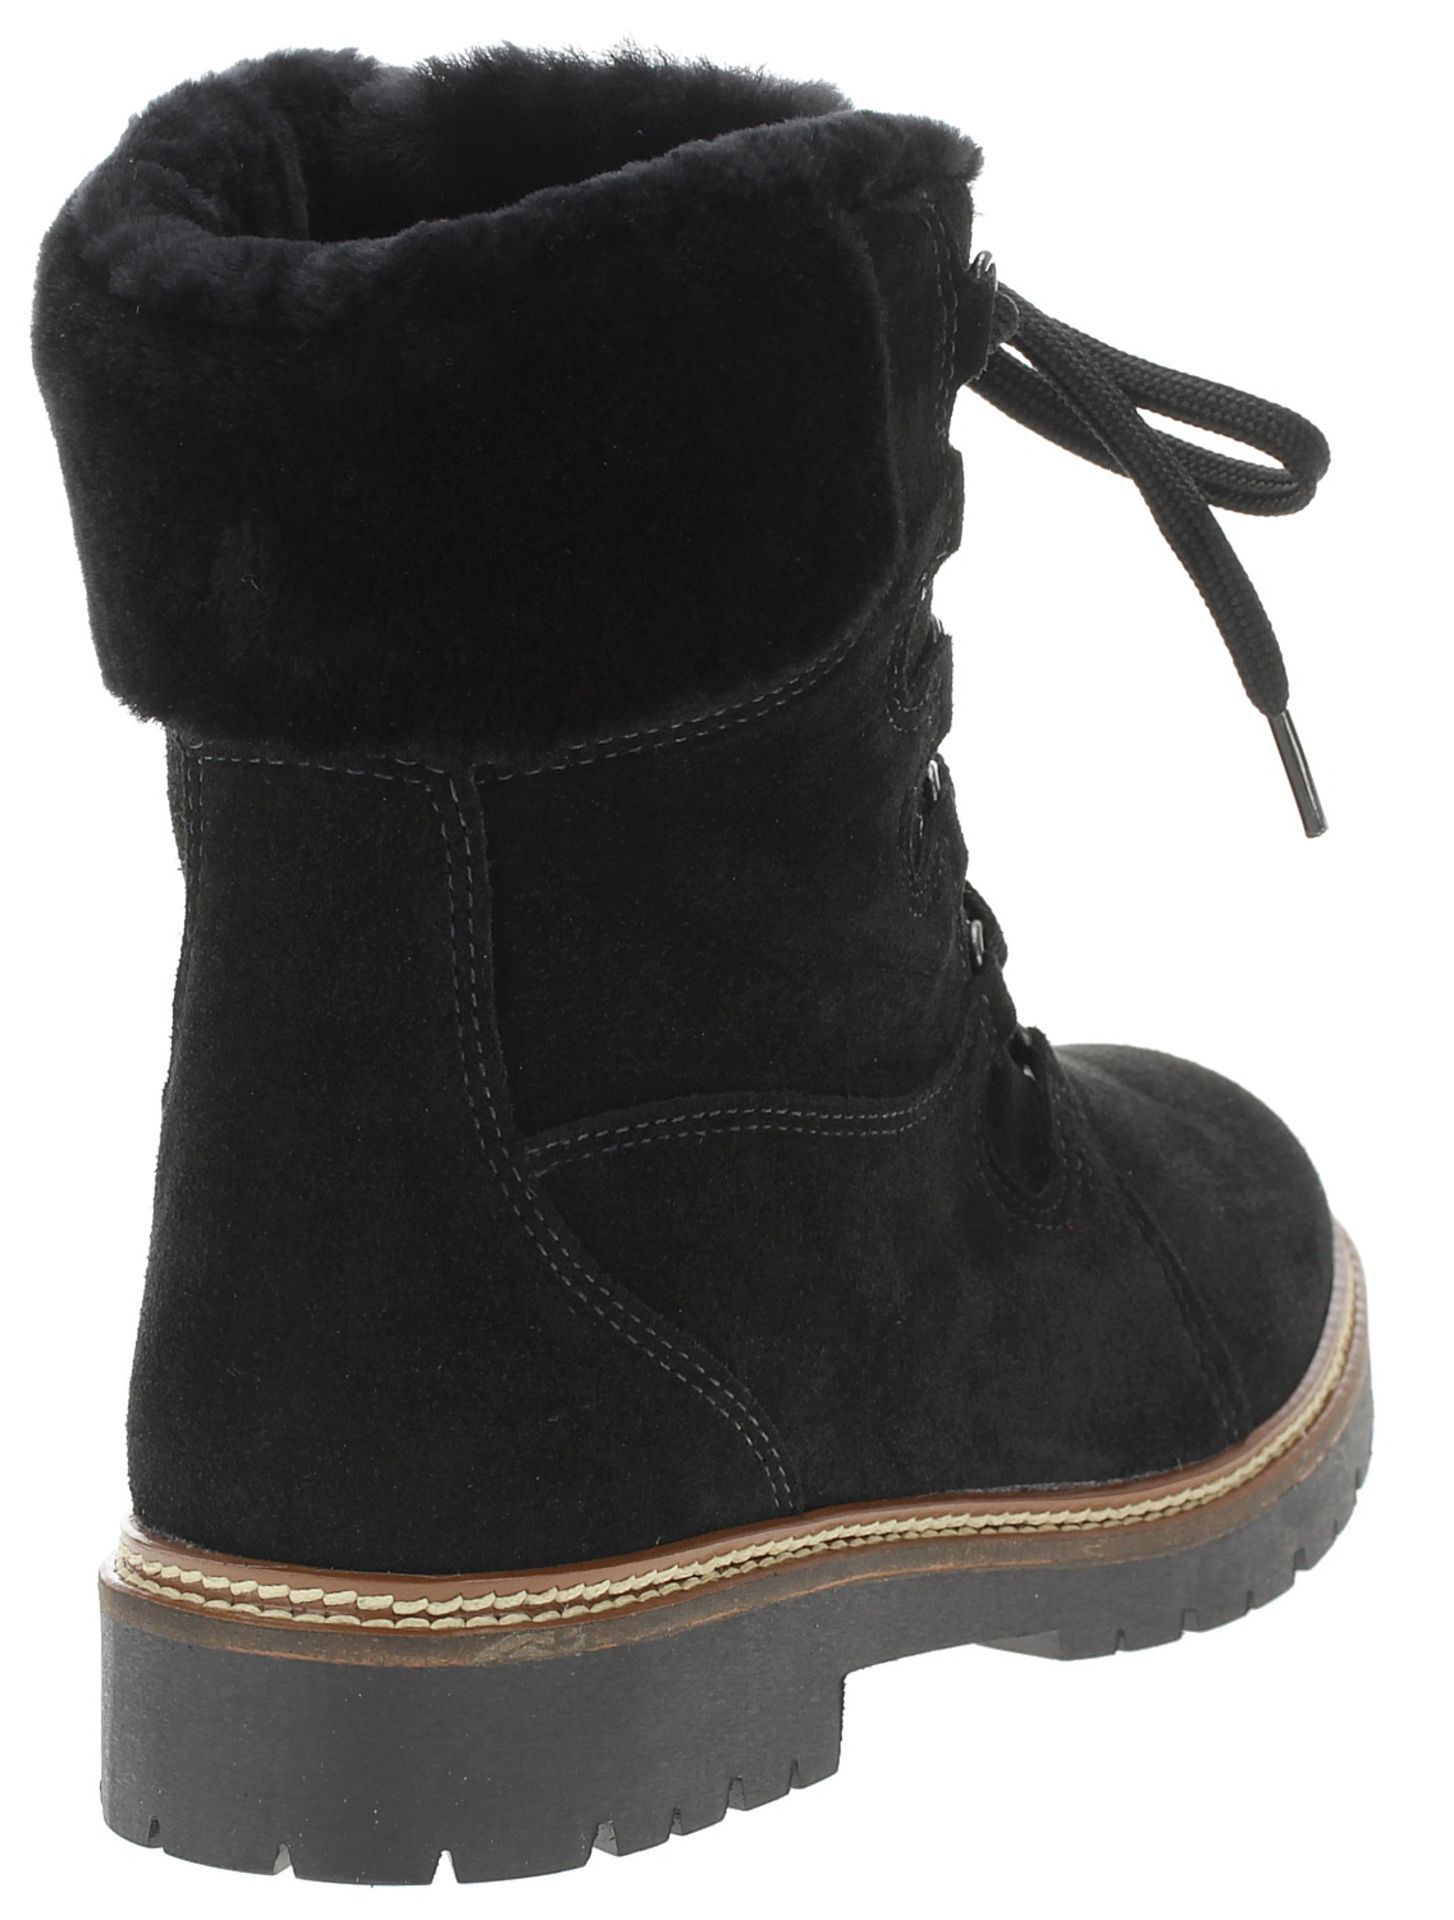 1 x Pair of Designer Olang Meribel 81 Nero Women's Winter Boots - Euro Size 40 - Brand New Boxed - Image 4 of 5